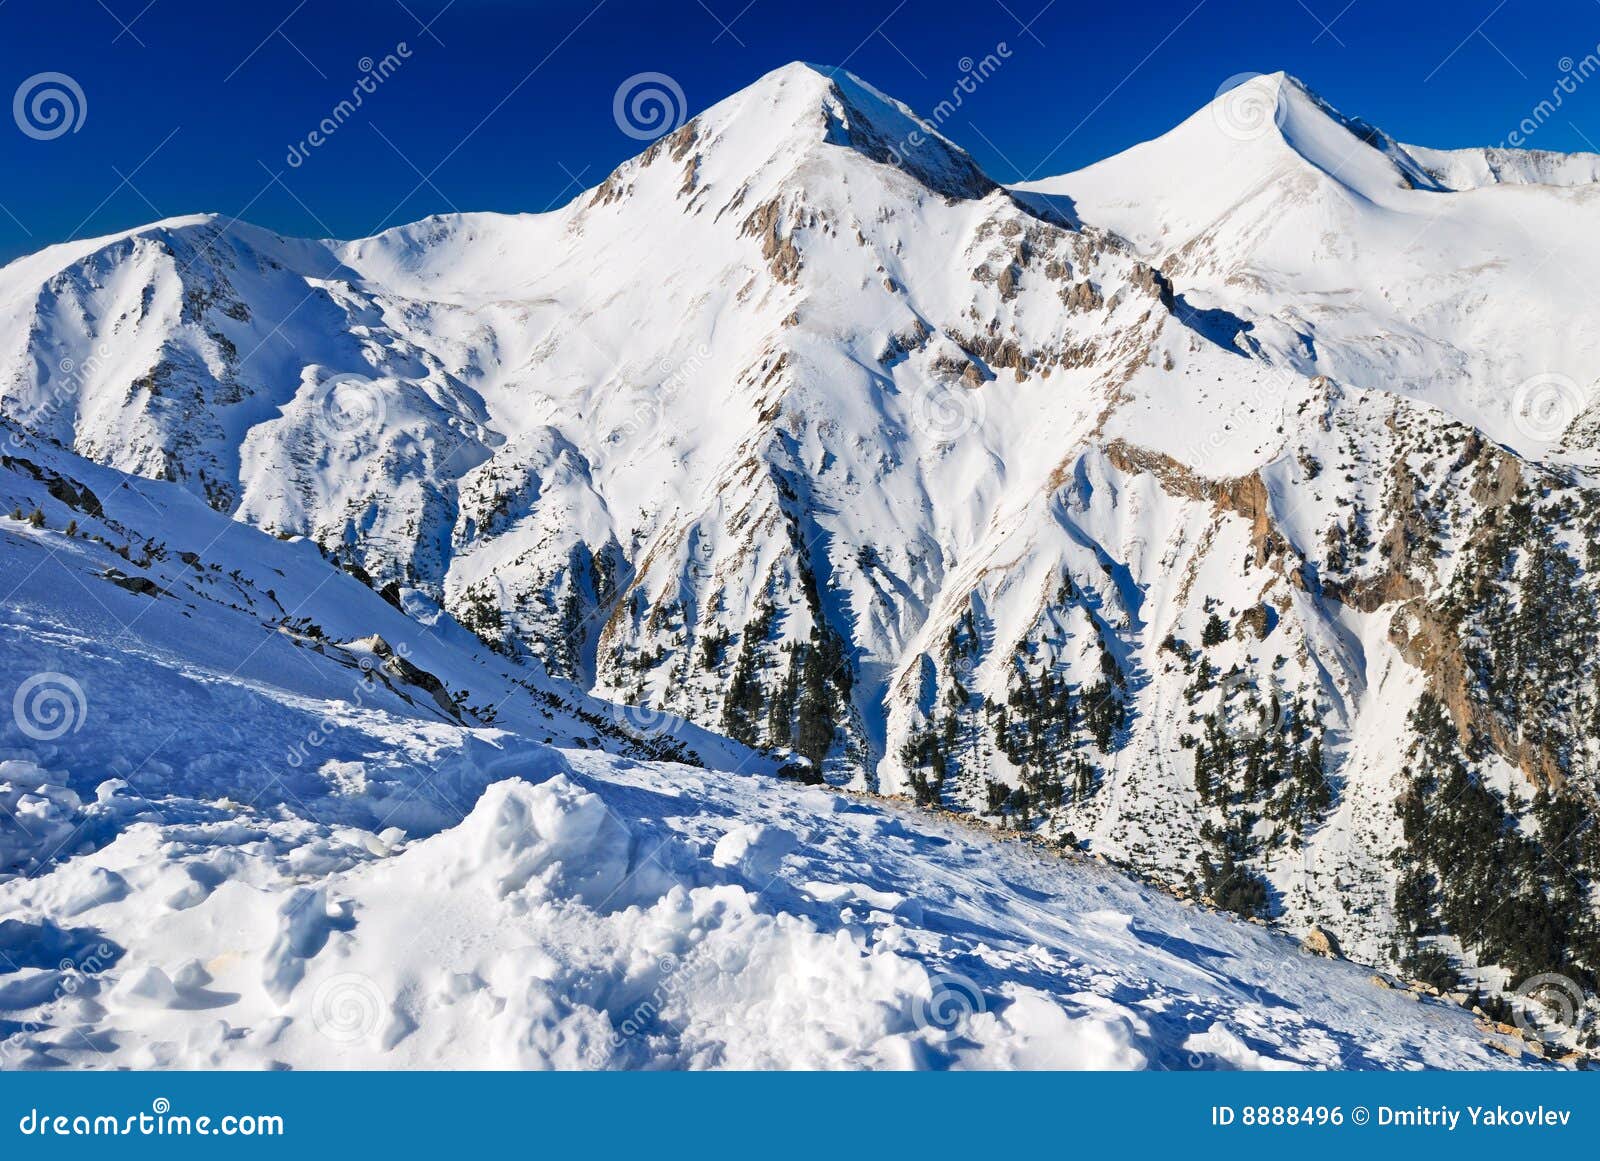 pirin mountain, bulgaria